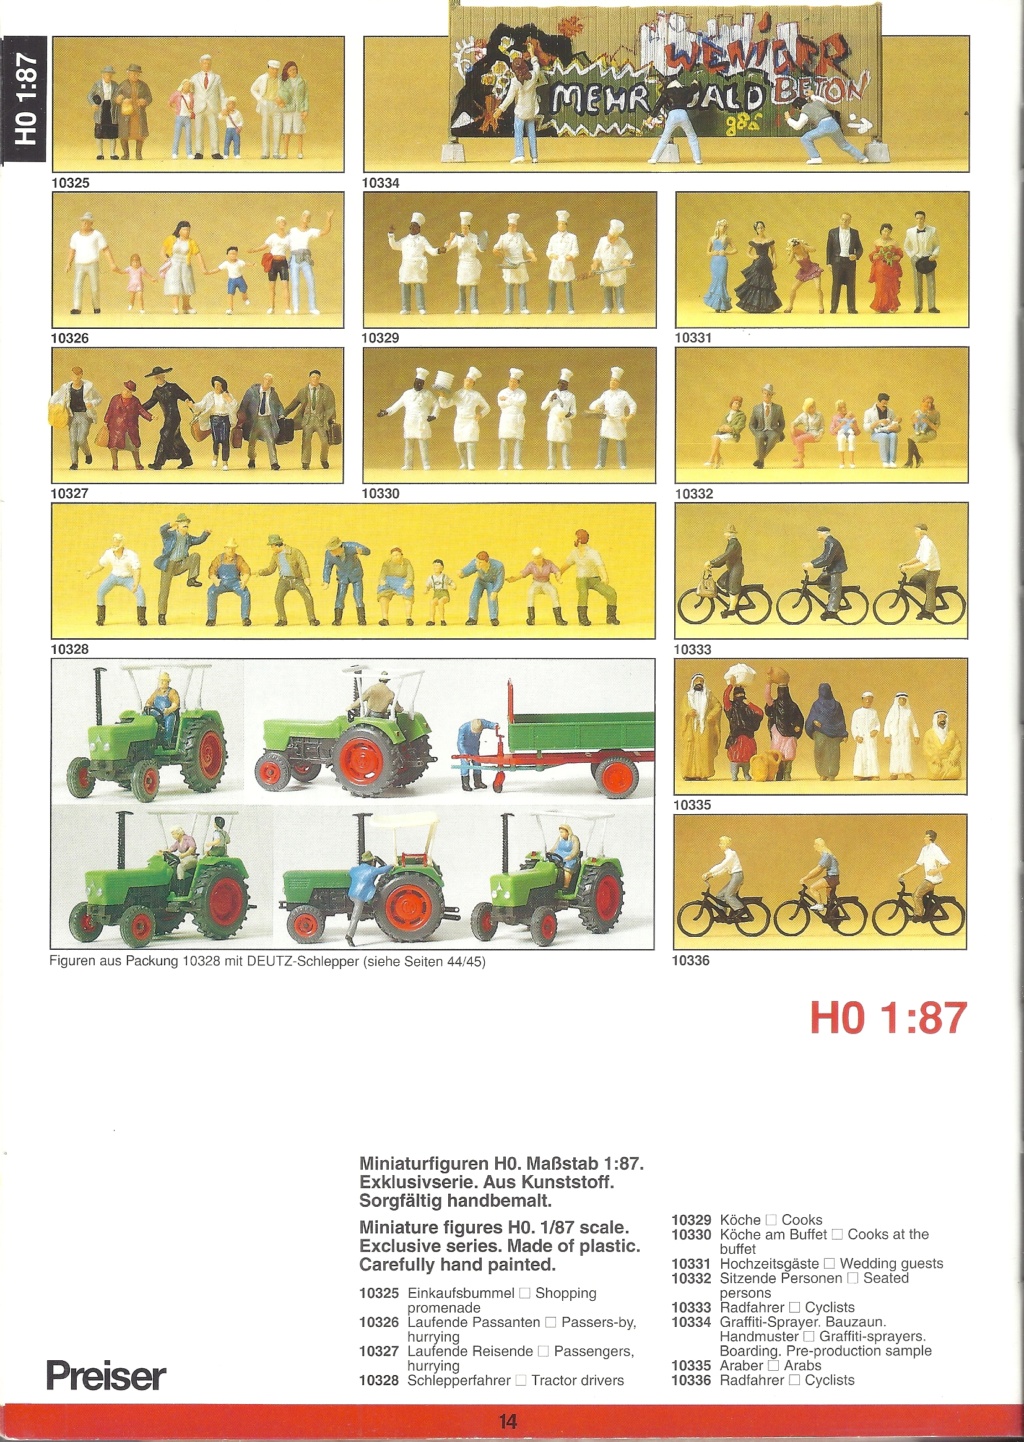 preiser - [PREISER 1996] Catalogue K22 1996 Preis906